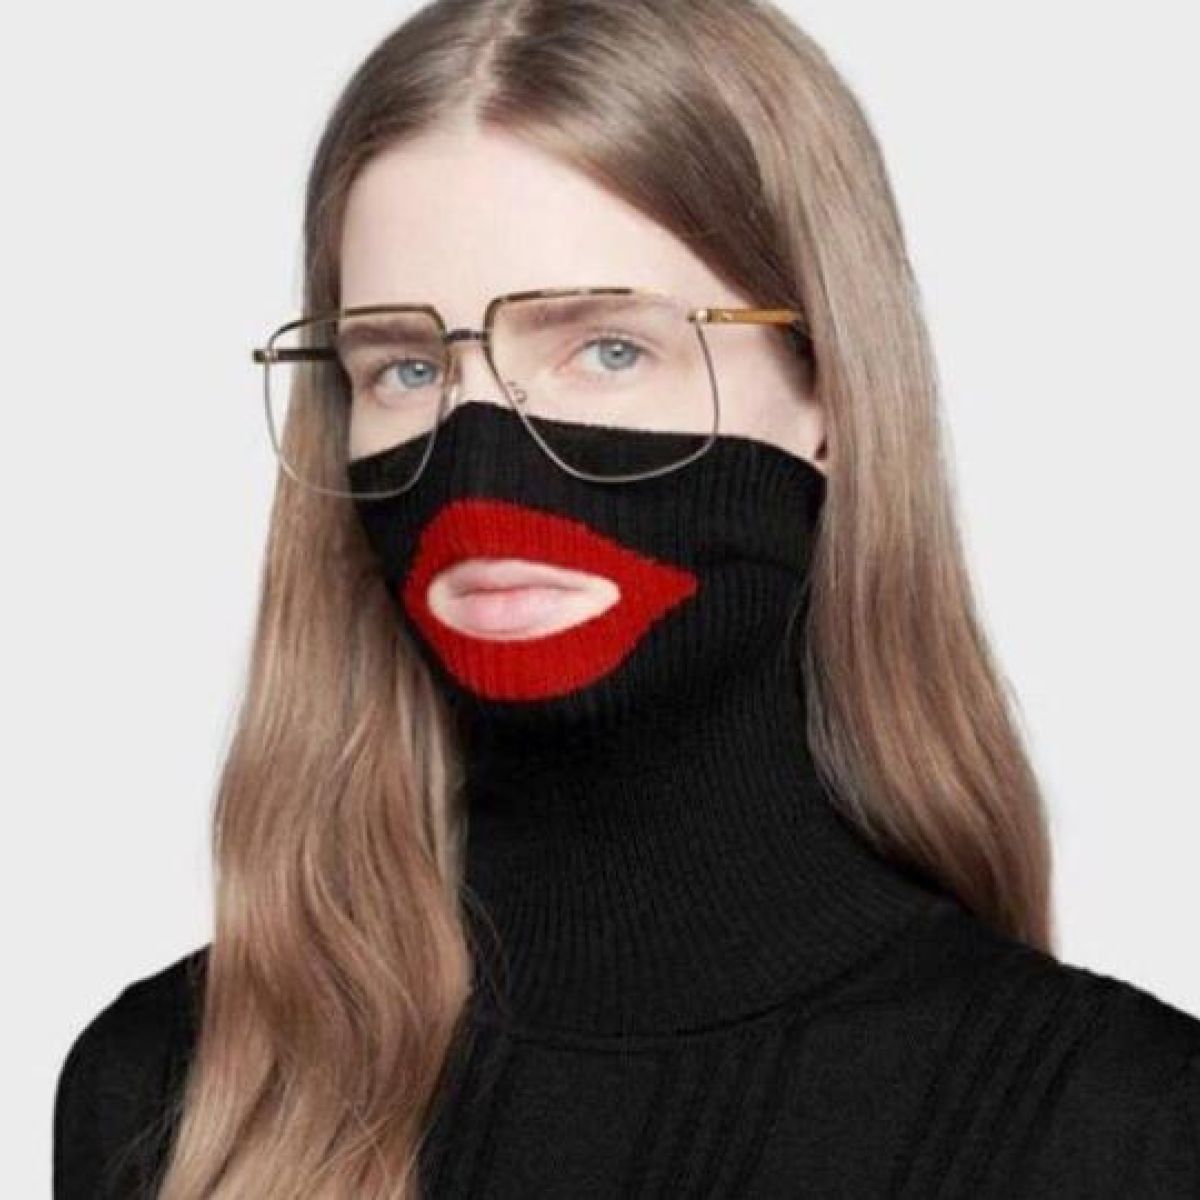 gucci blackface jumper for sale